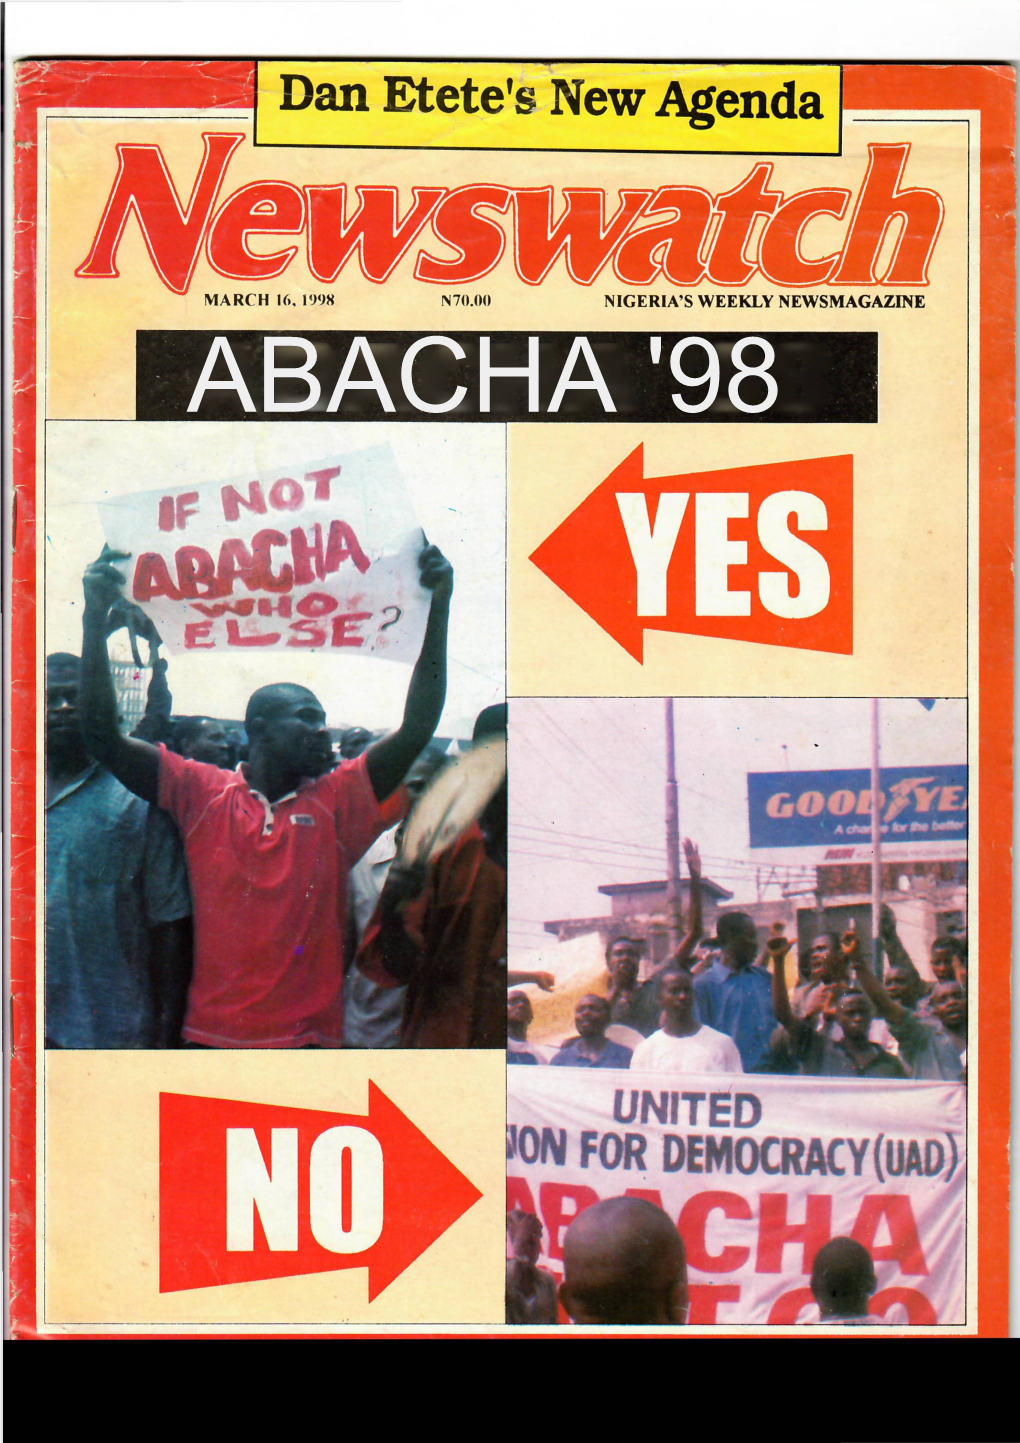 Abacha '98 the Cool, Smooth Choice